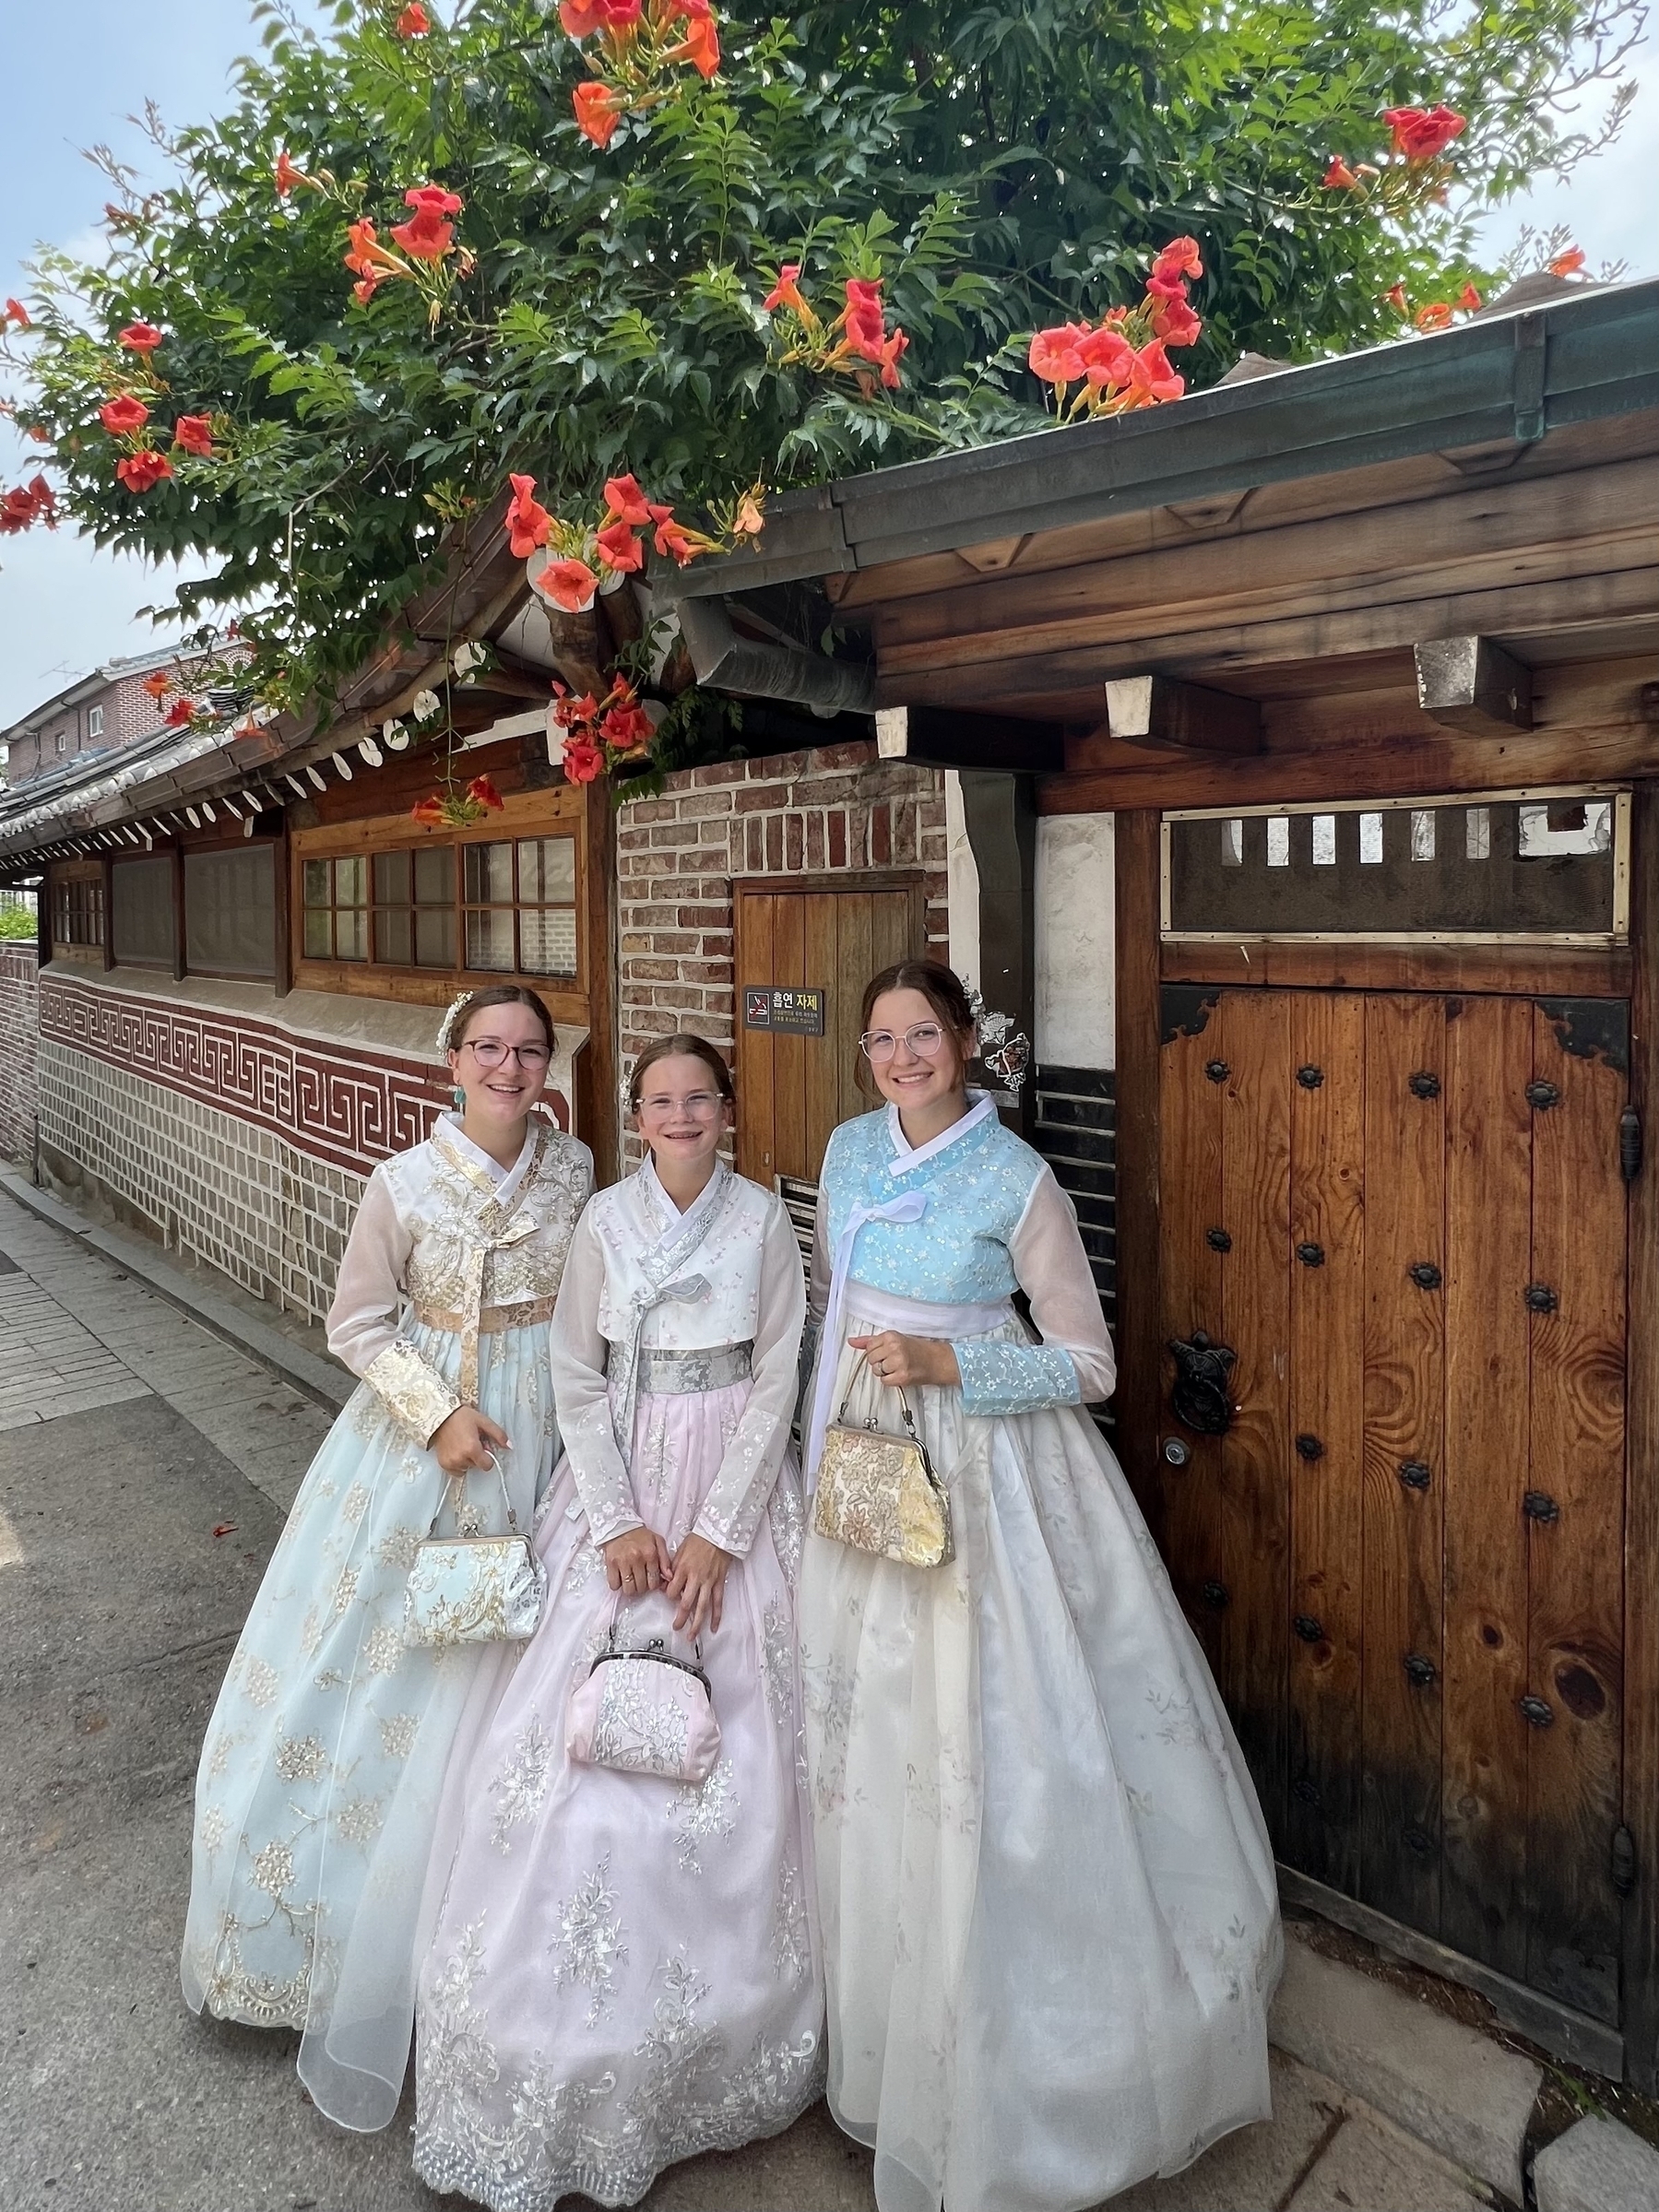 My daughters in Bukchon Village wearing hanbok.